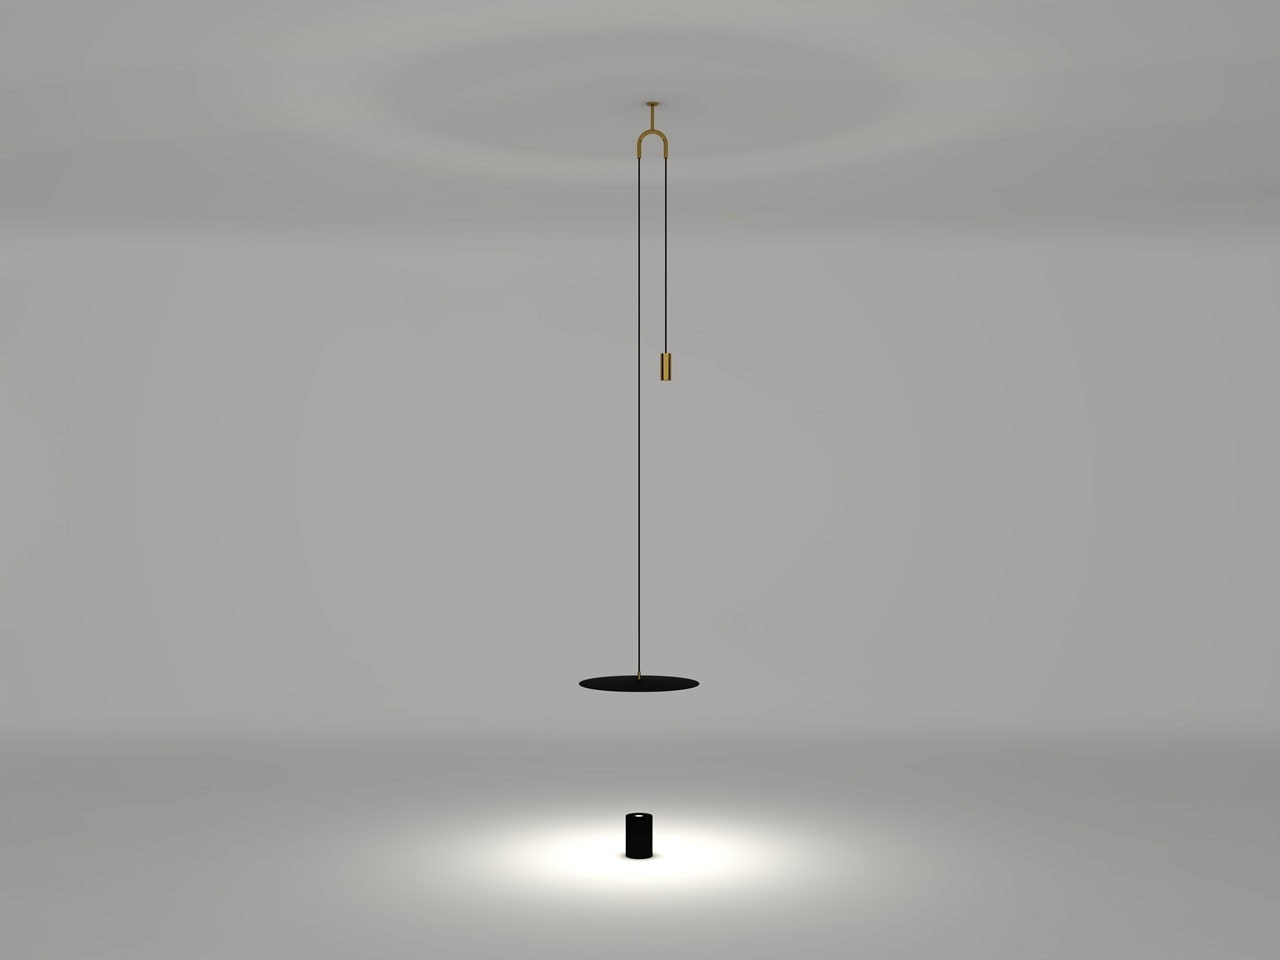 Dada lamp by Matteo Zardini